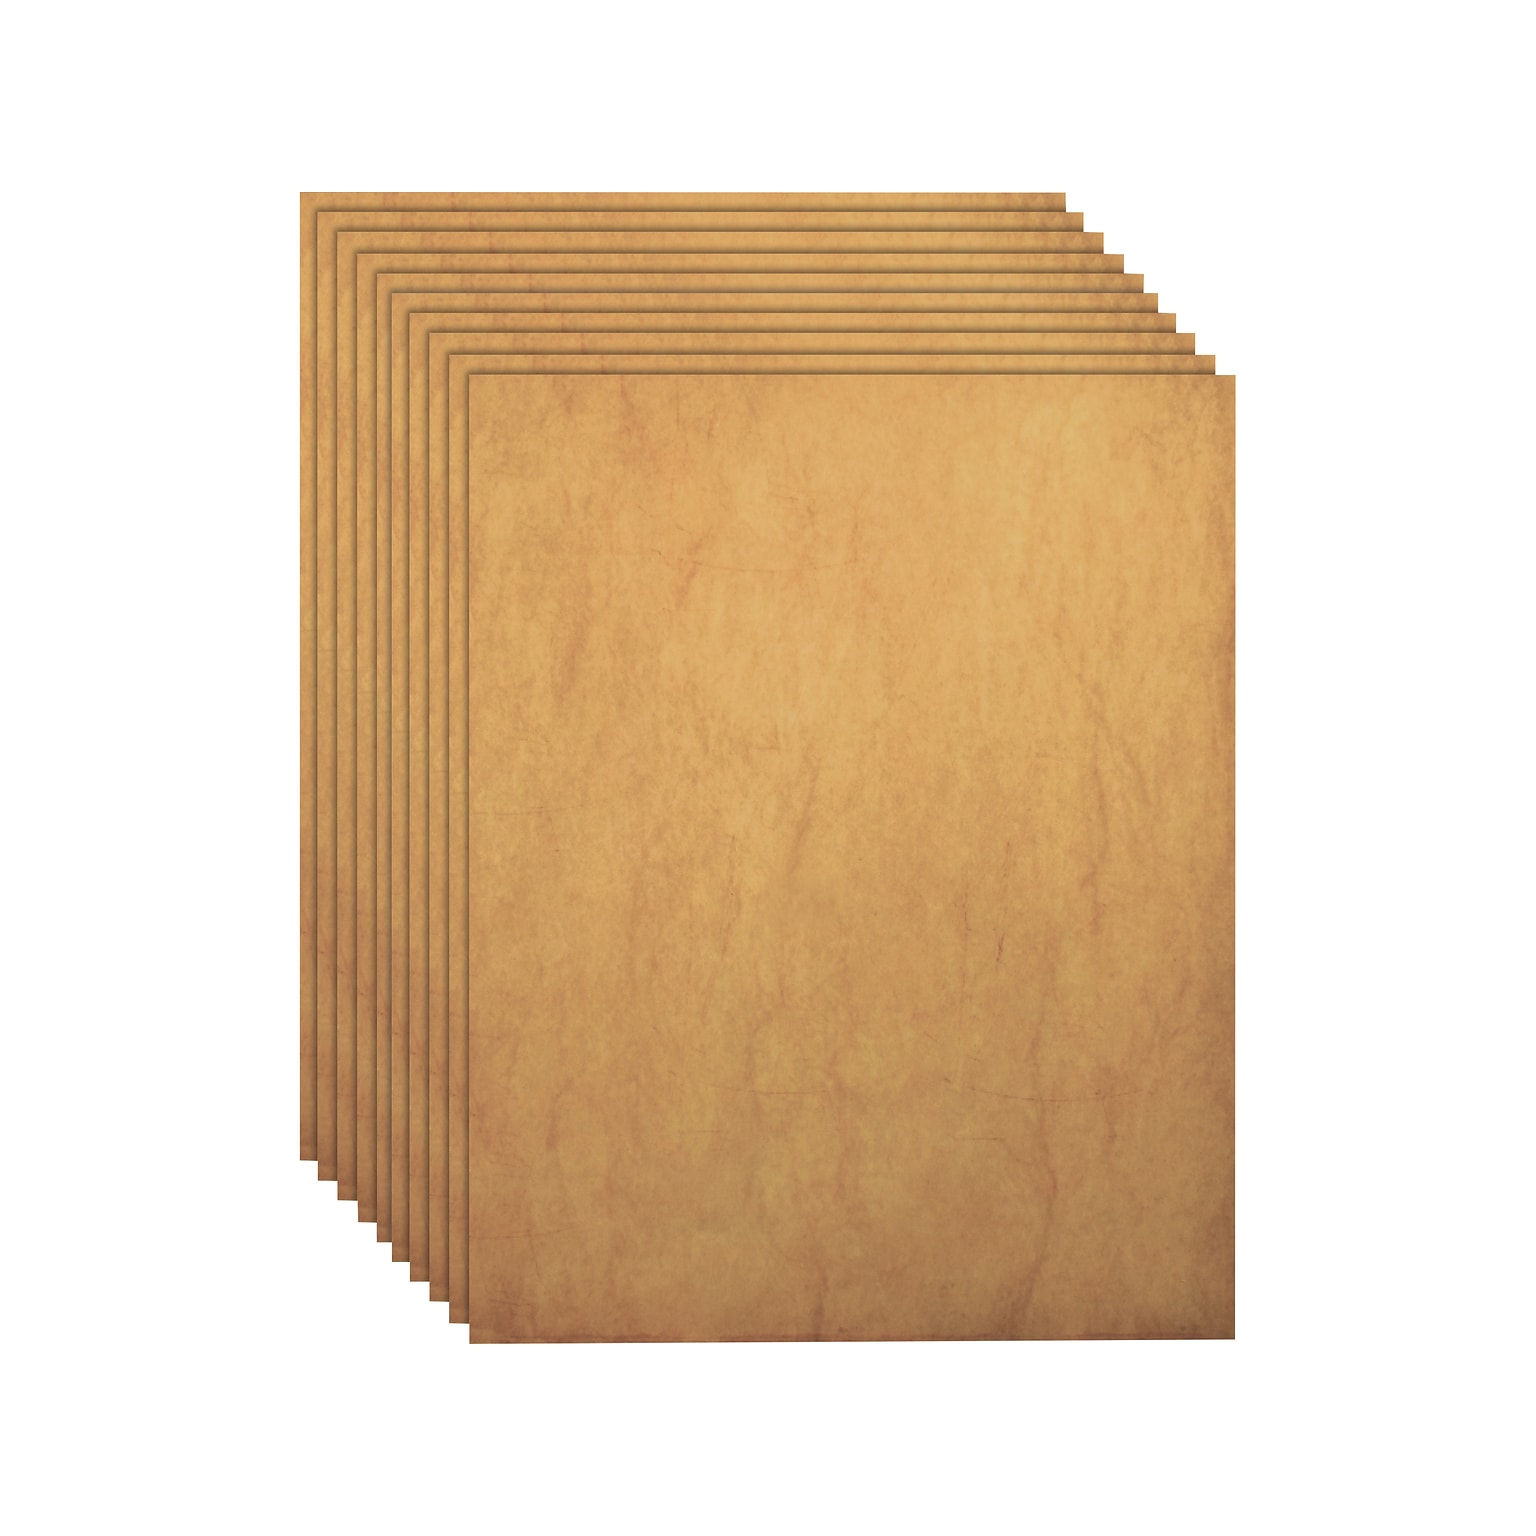 Better Office Design/Craft Paper, 8.5 x 11, Parchment, 96/Pack (64501)